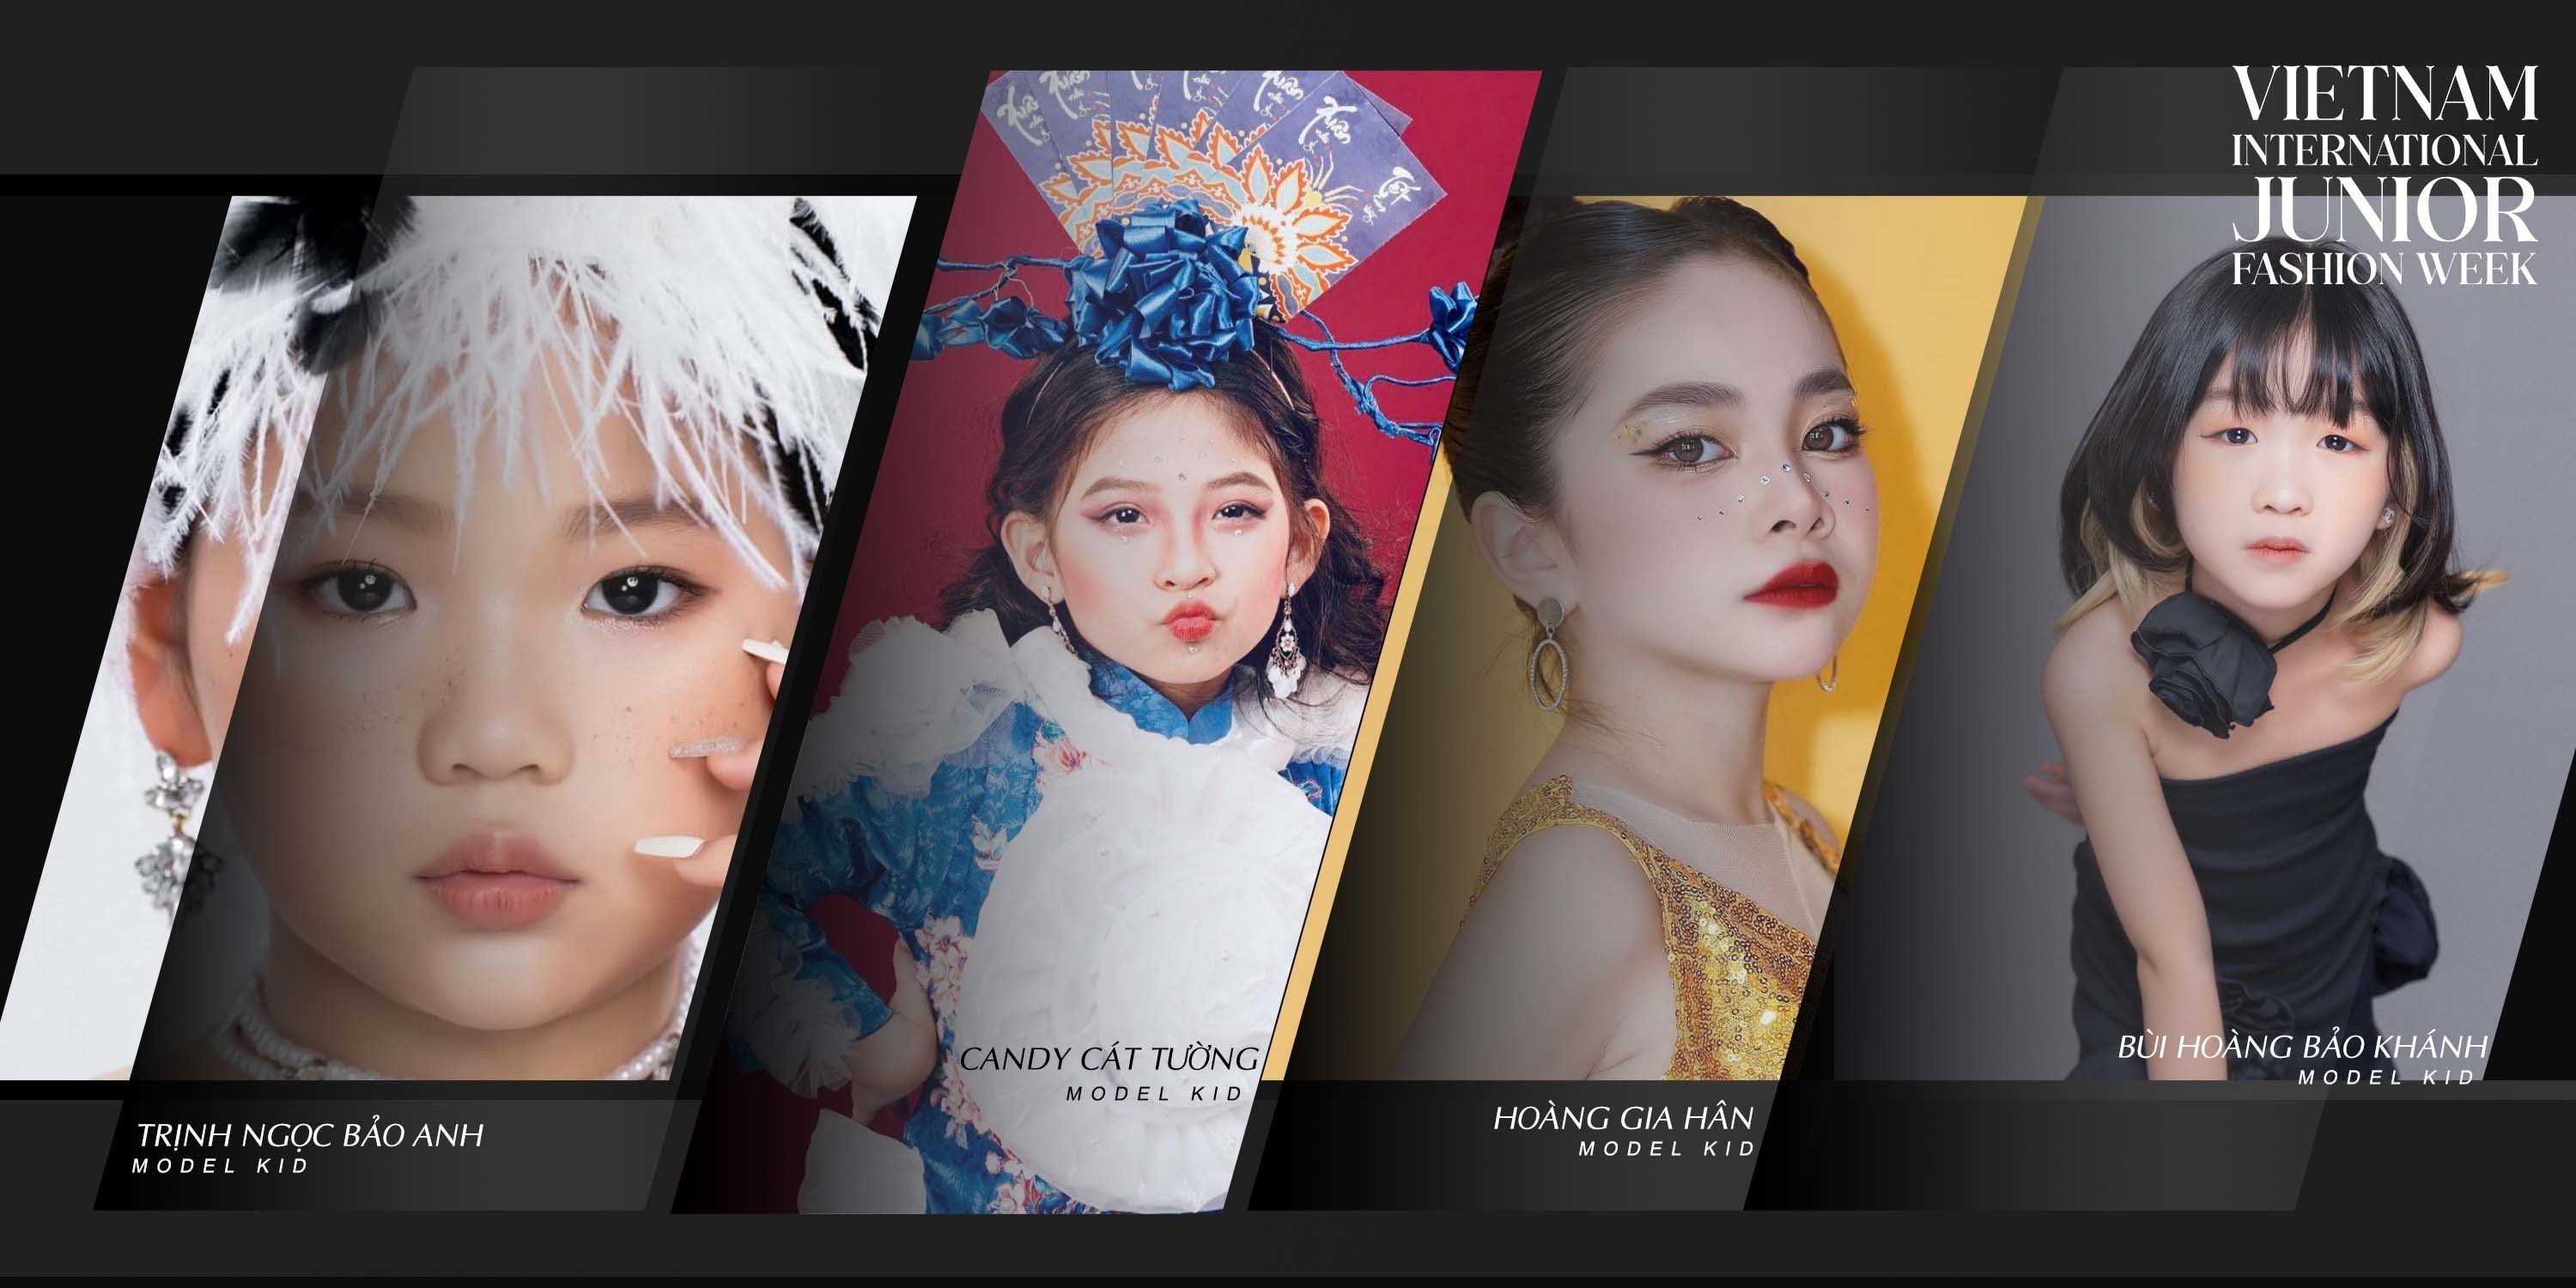 Four child models to showcase costumes representing three regions in Vietnam